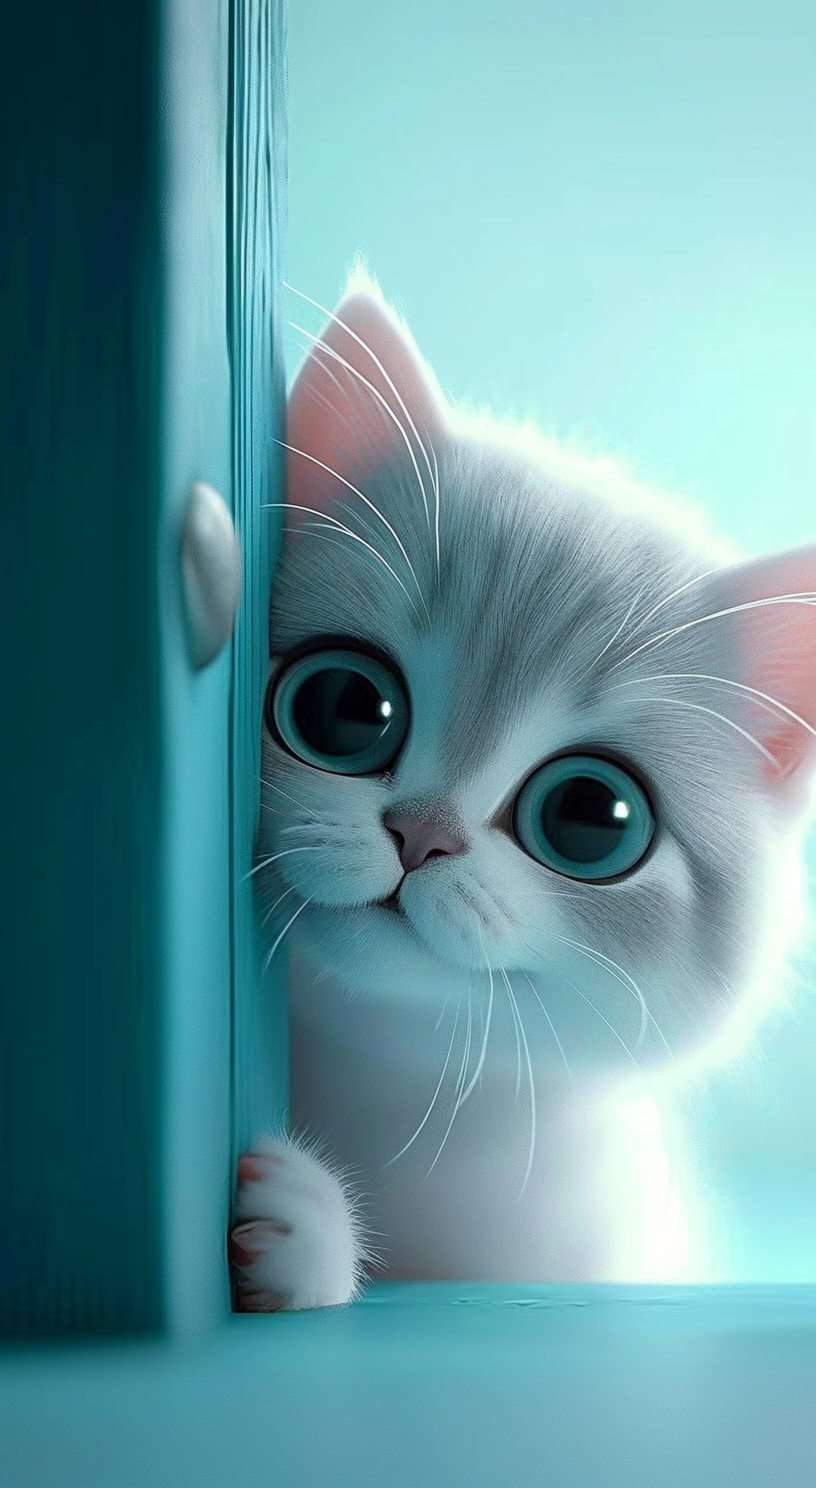 Download our HD mobile wallpaper featuring an adorable kitten peeking